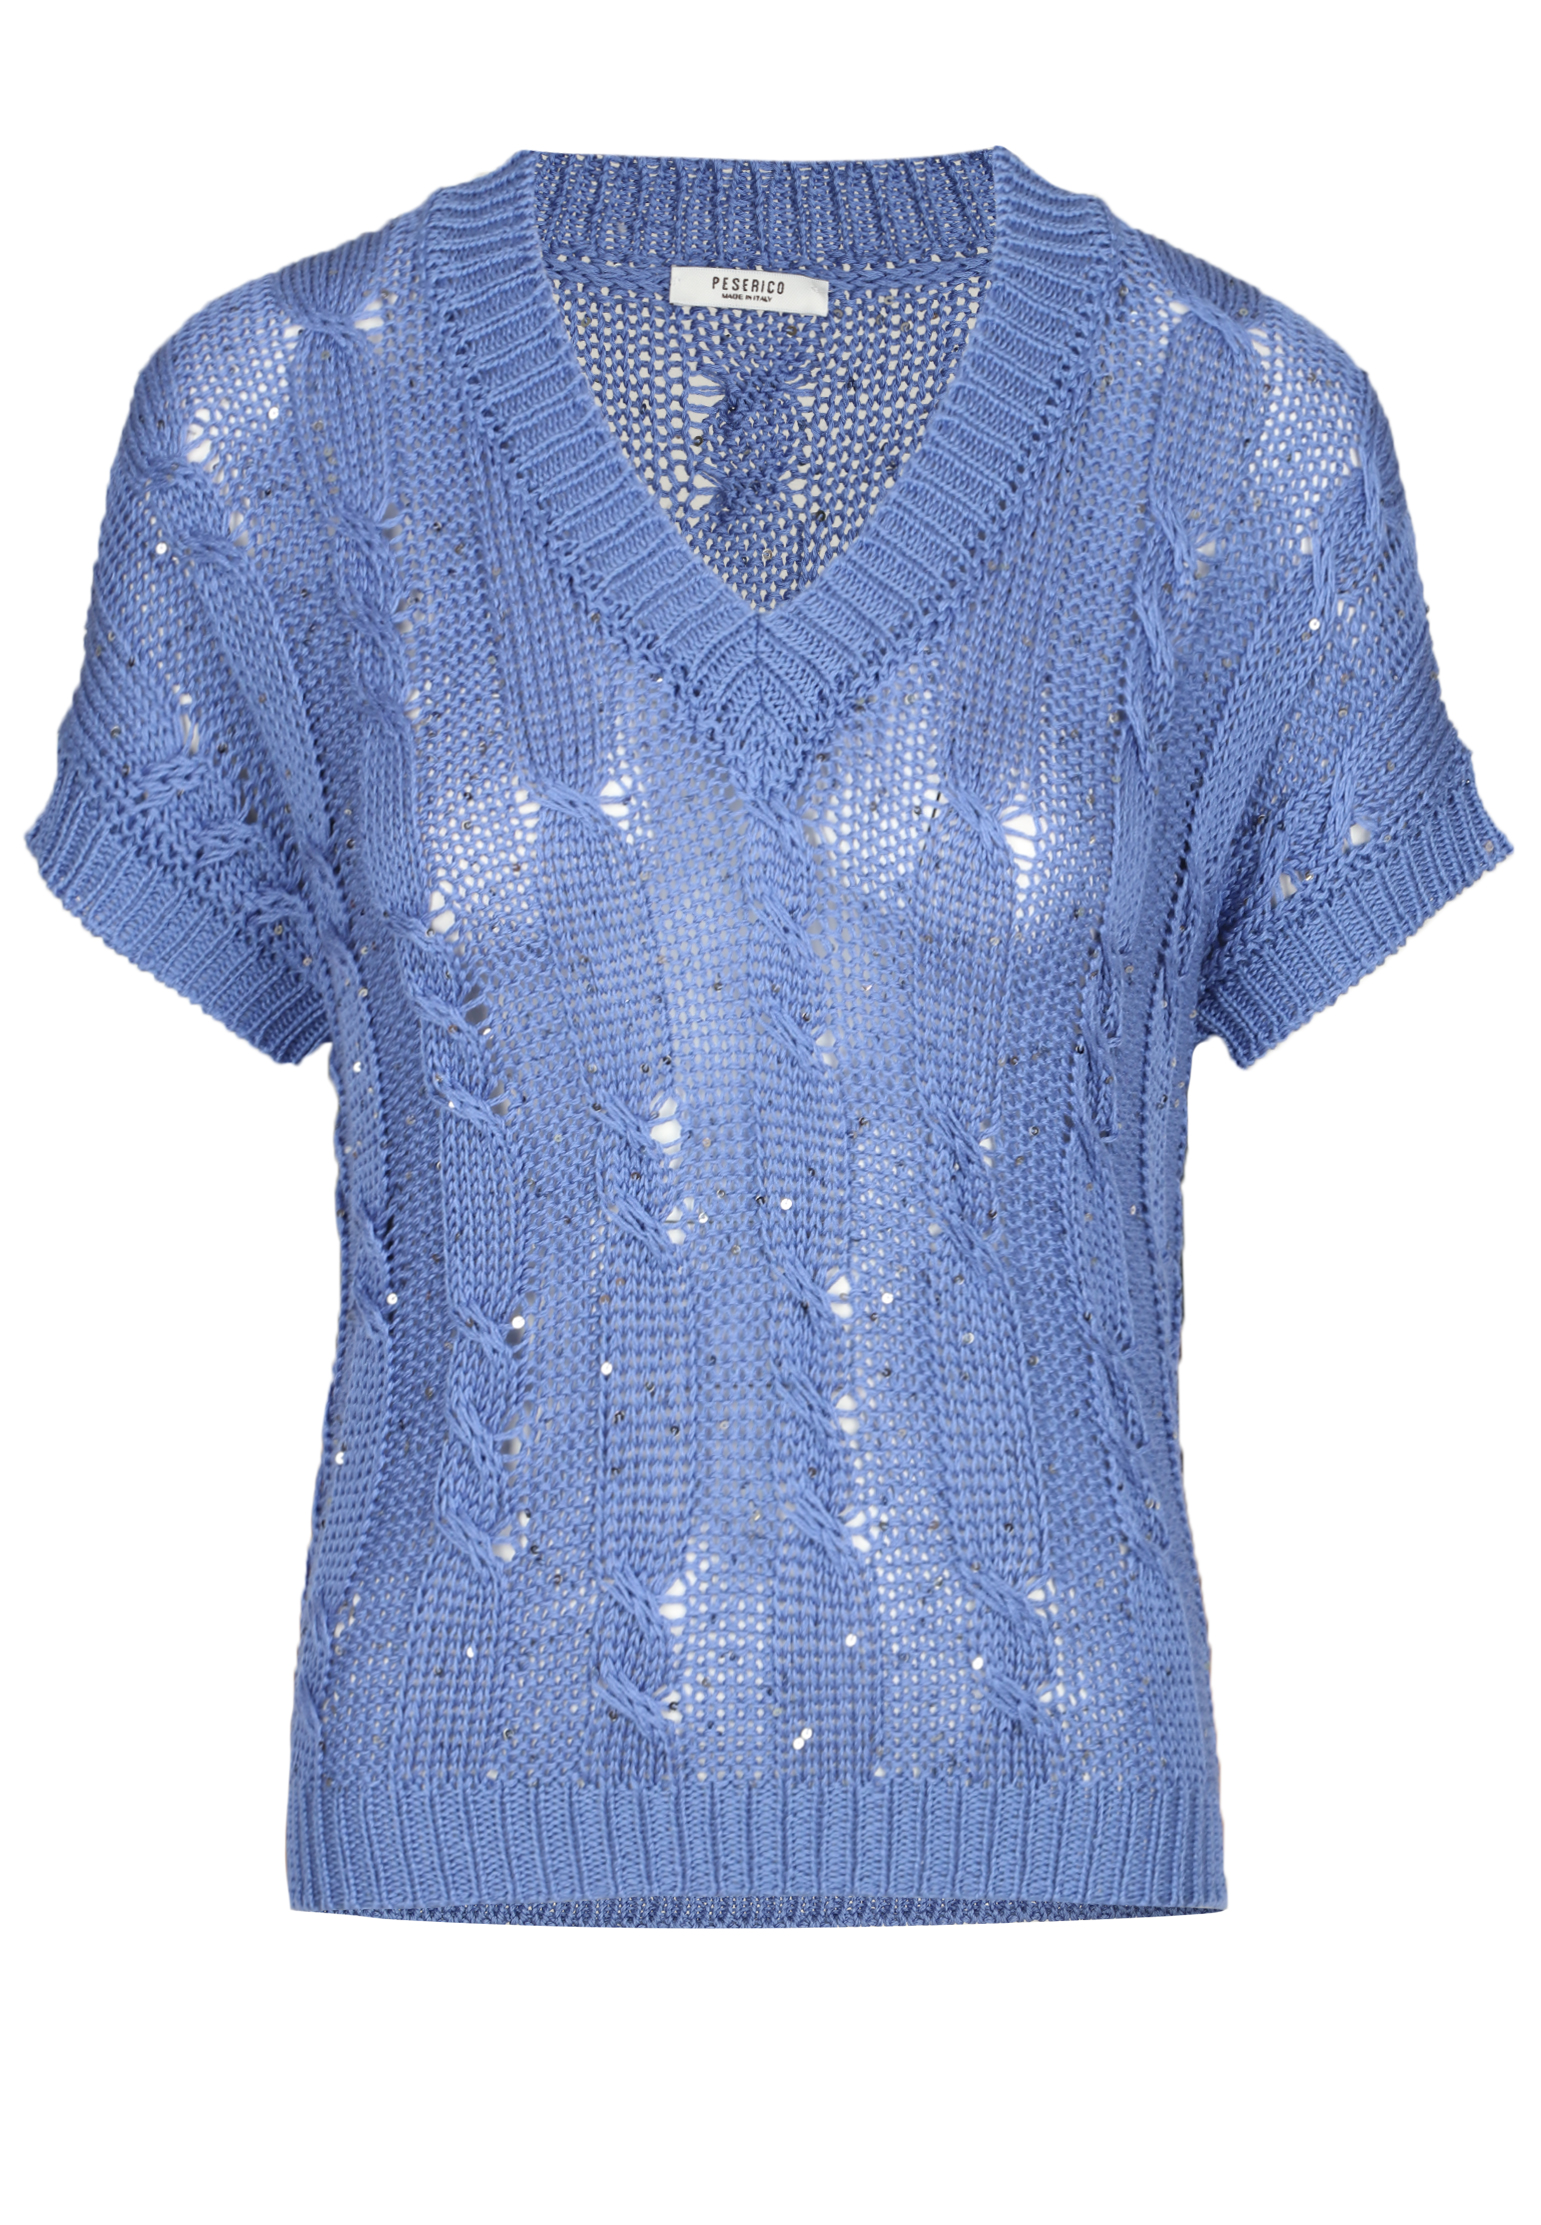 Пуловер PESERICO Синий, размер 42 154211 - фото 1